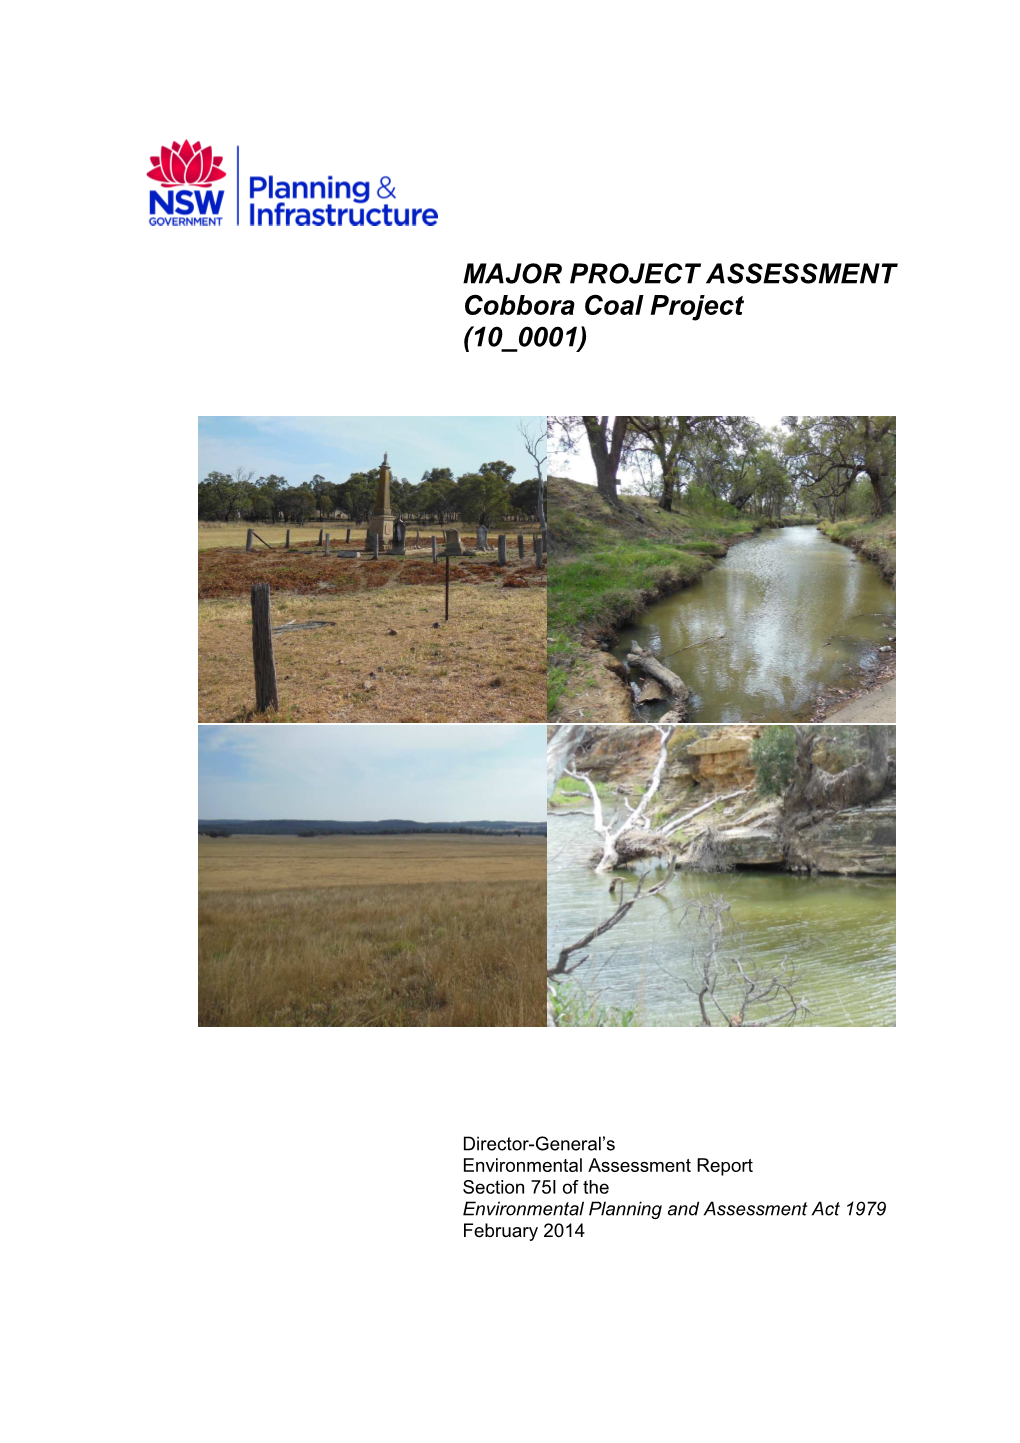 Cobbora Coal Mine Assessment Report Final V4